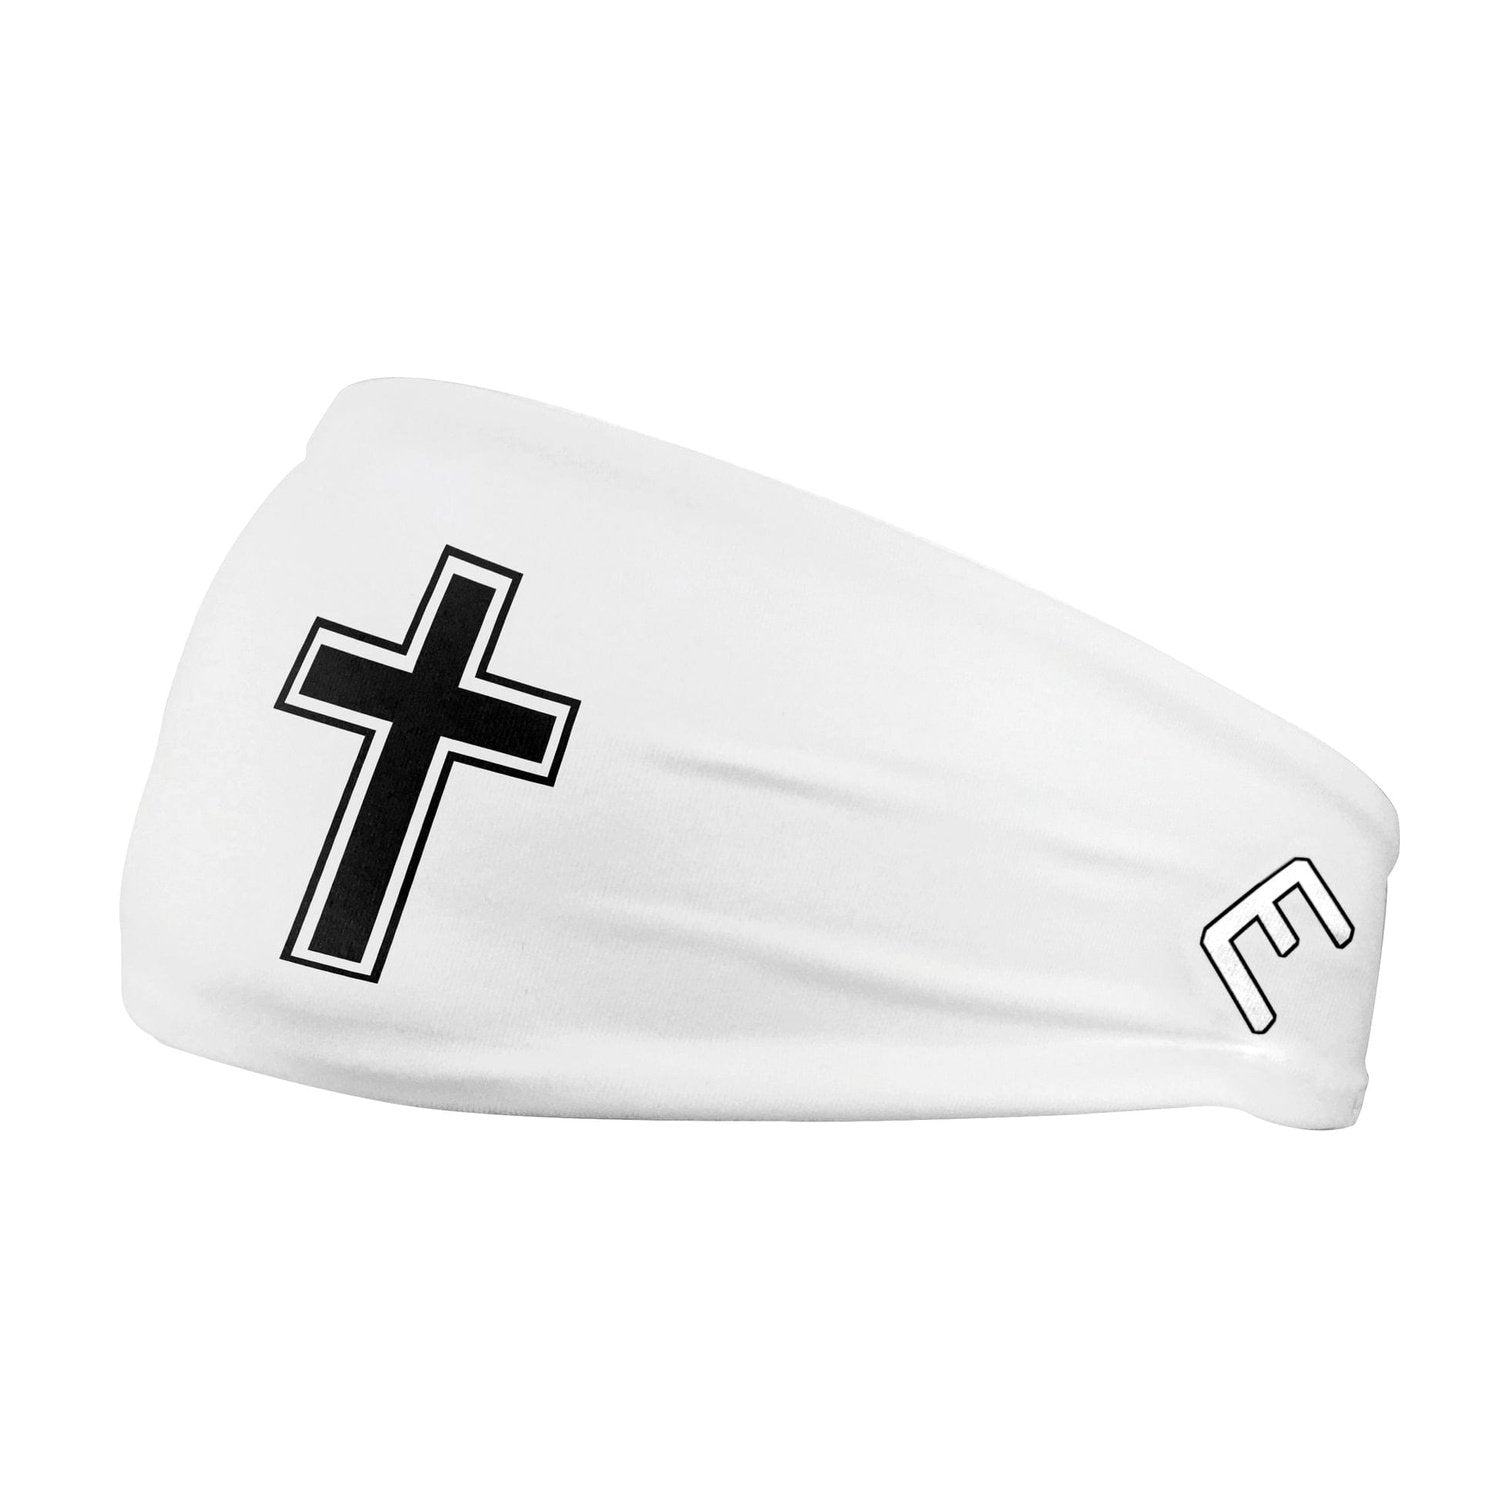 Elite Athletic Gear Faith Cross White Headband kaufen bei HighPowered.ch